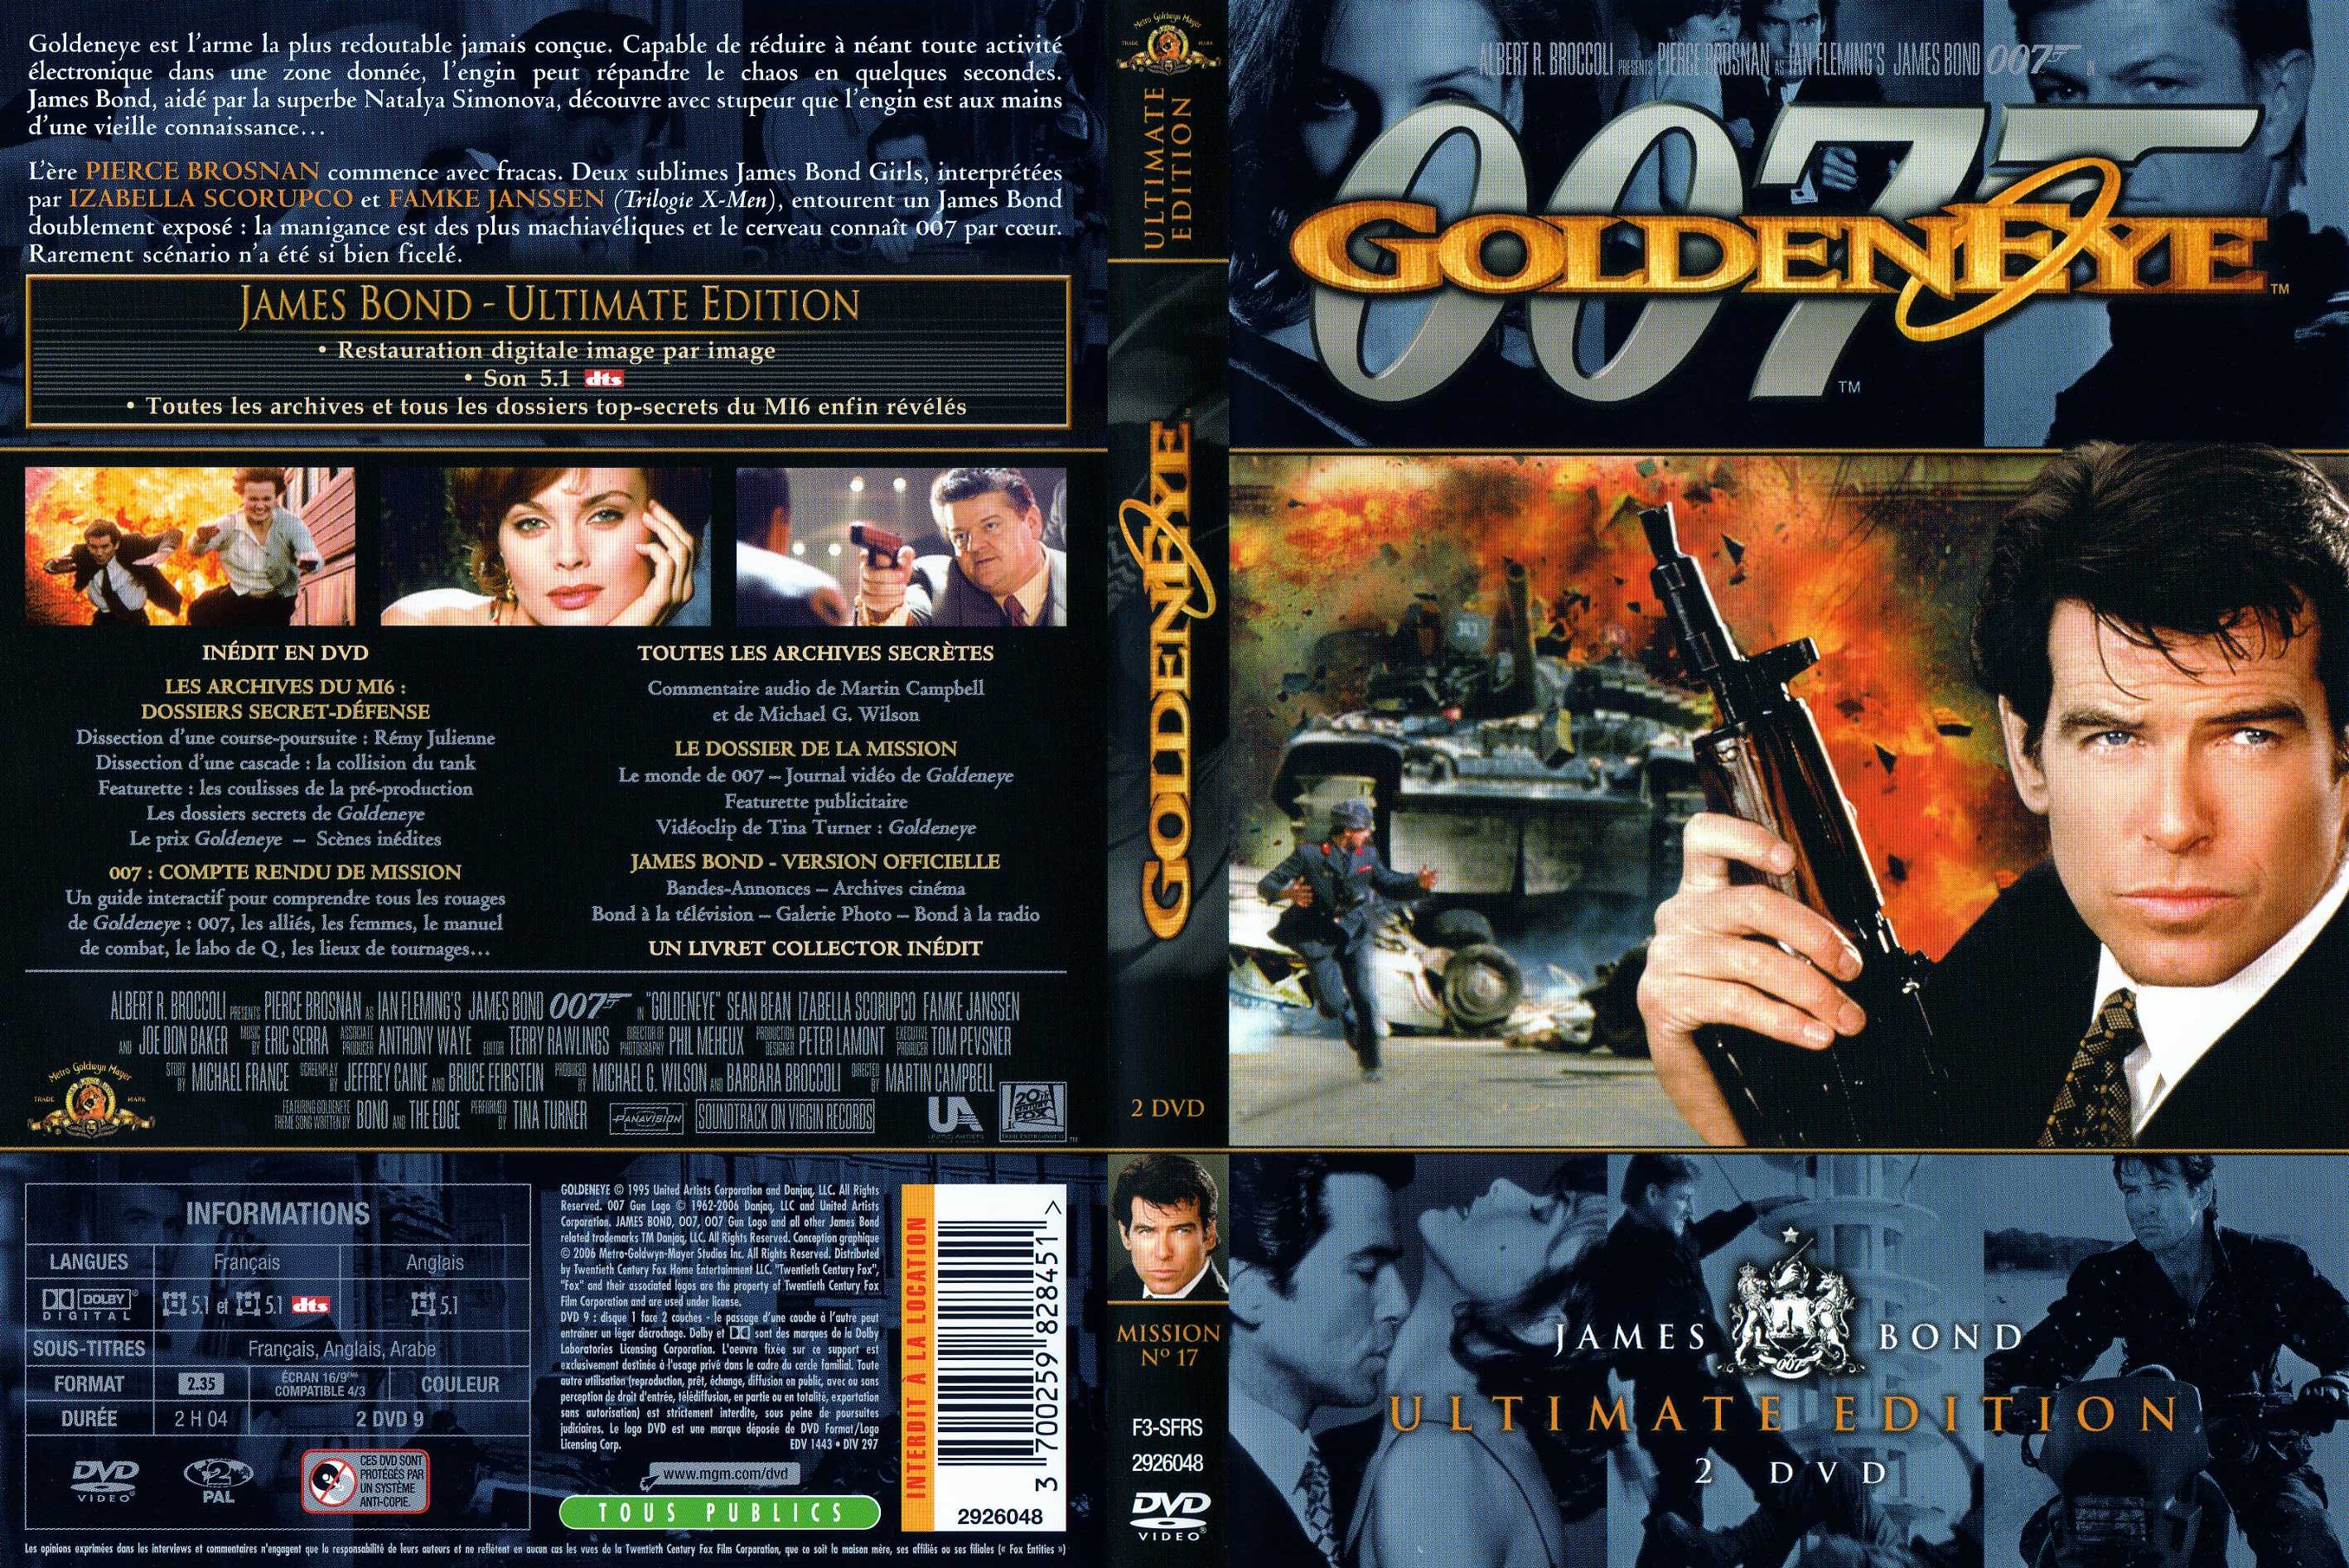 Jaquette DVD James Bond 007 Goldeneye Ultimate Edition